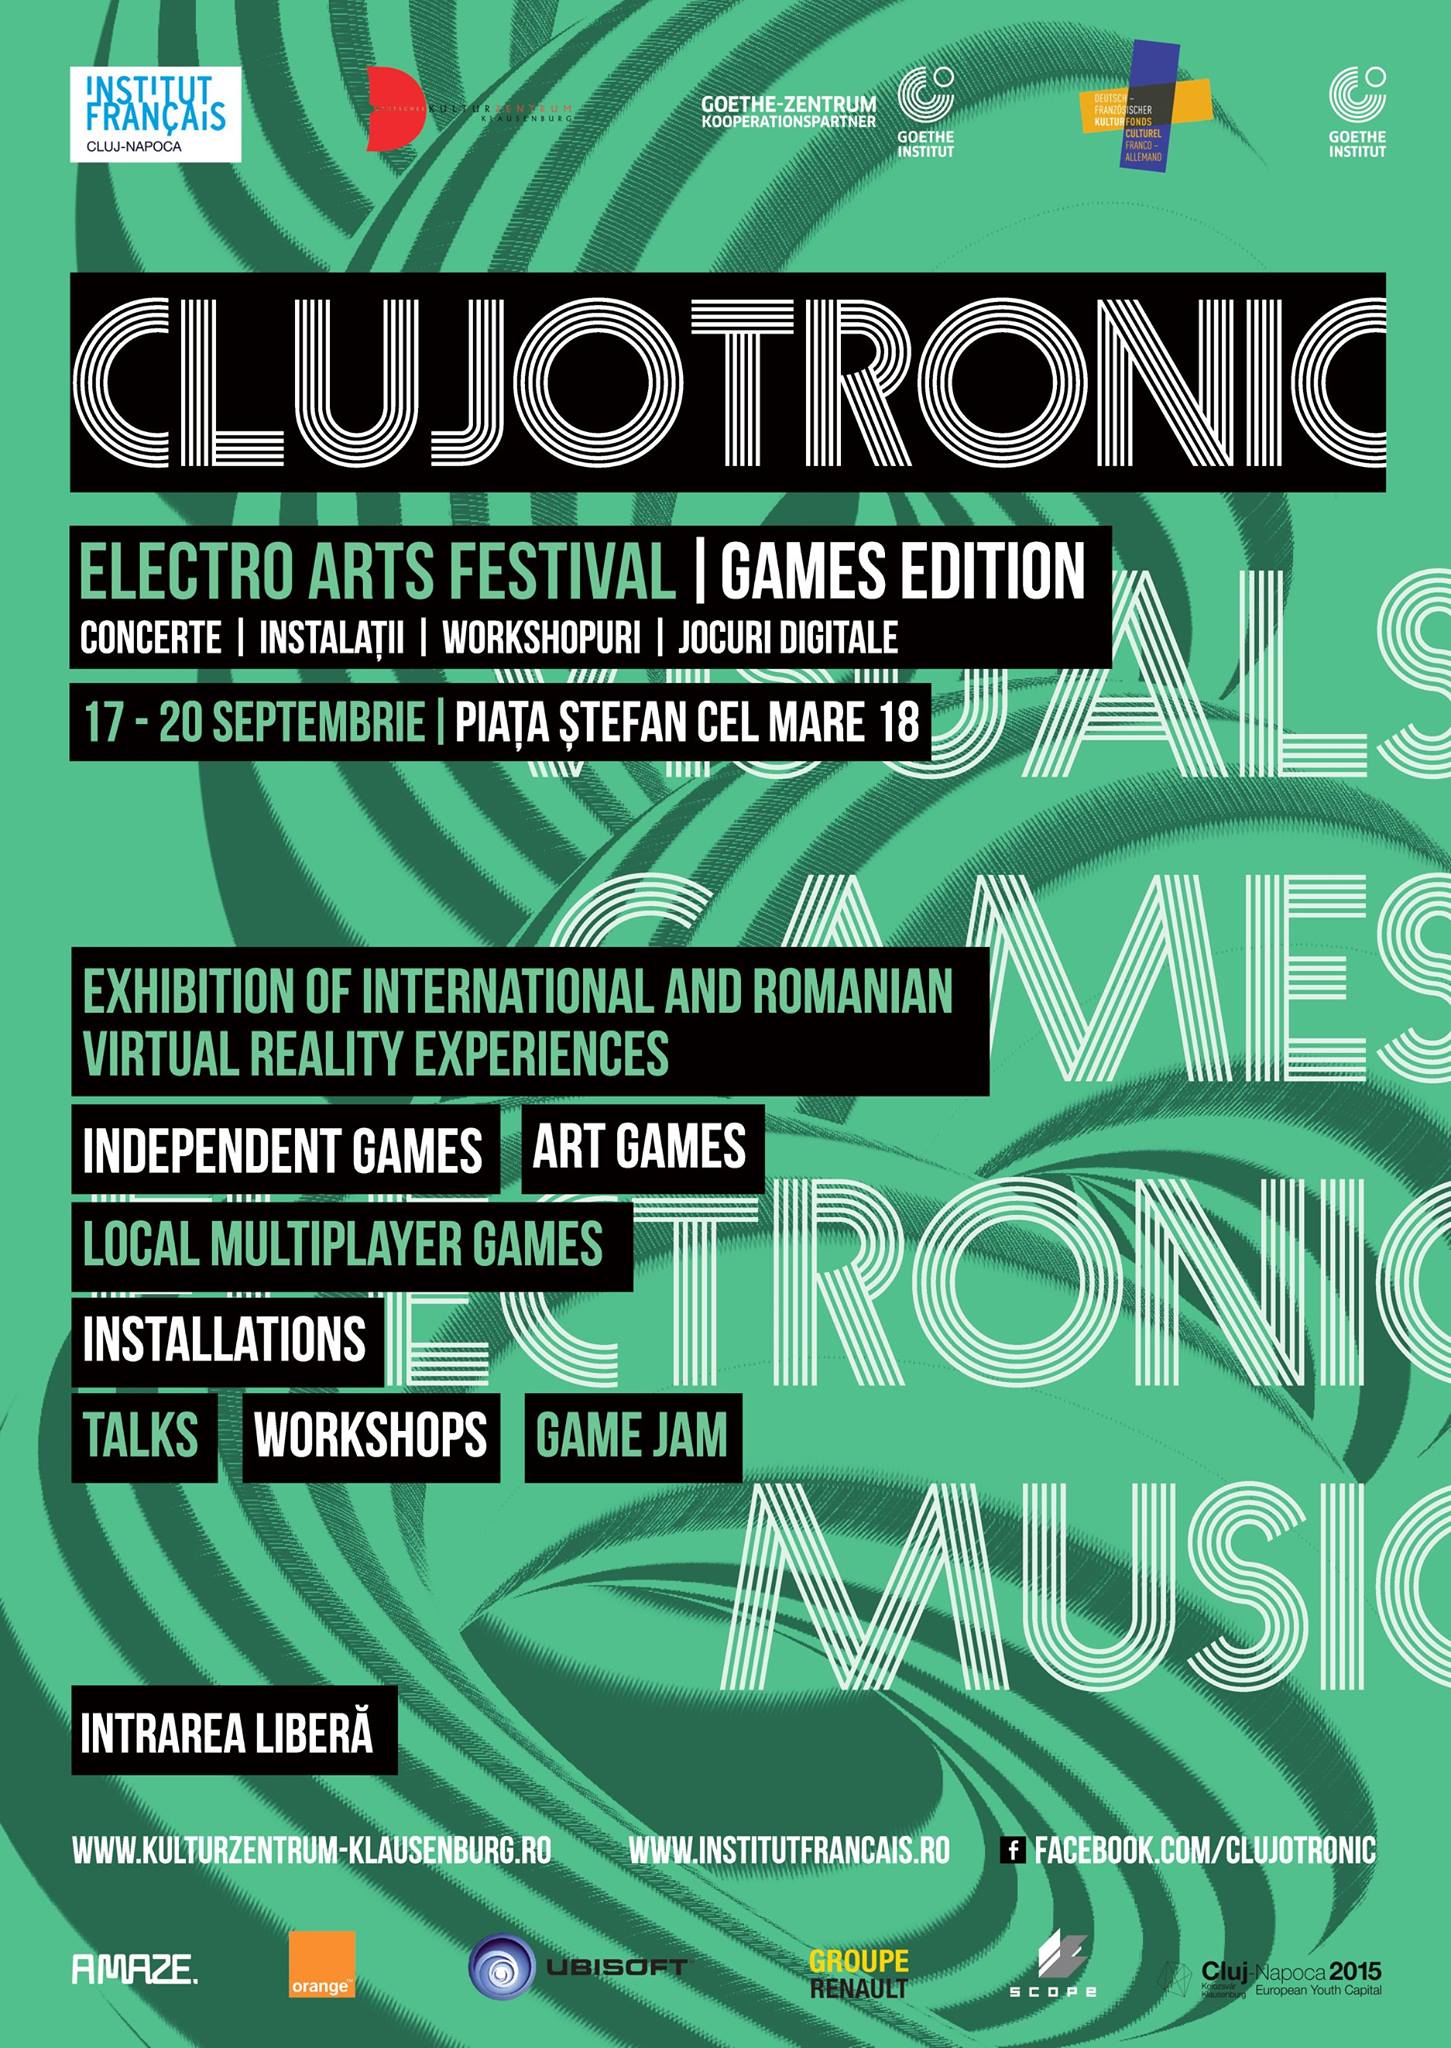 CLUJOTRONIC – Electro Arts Festival 2015